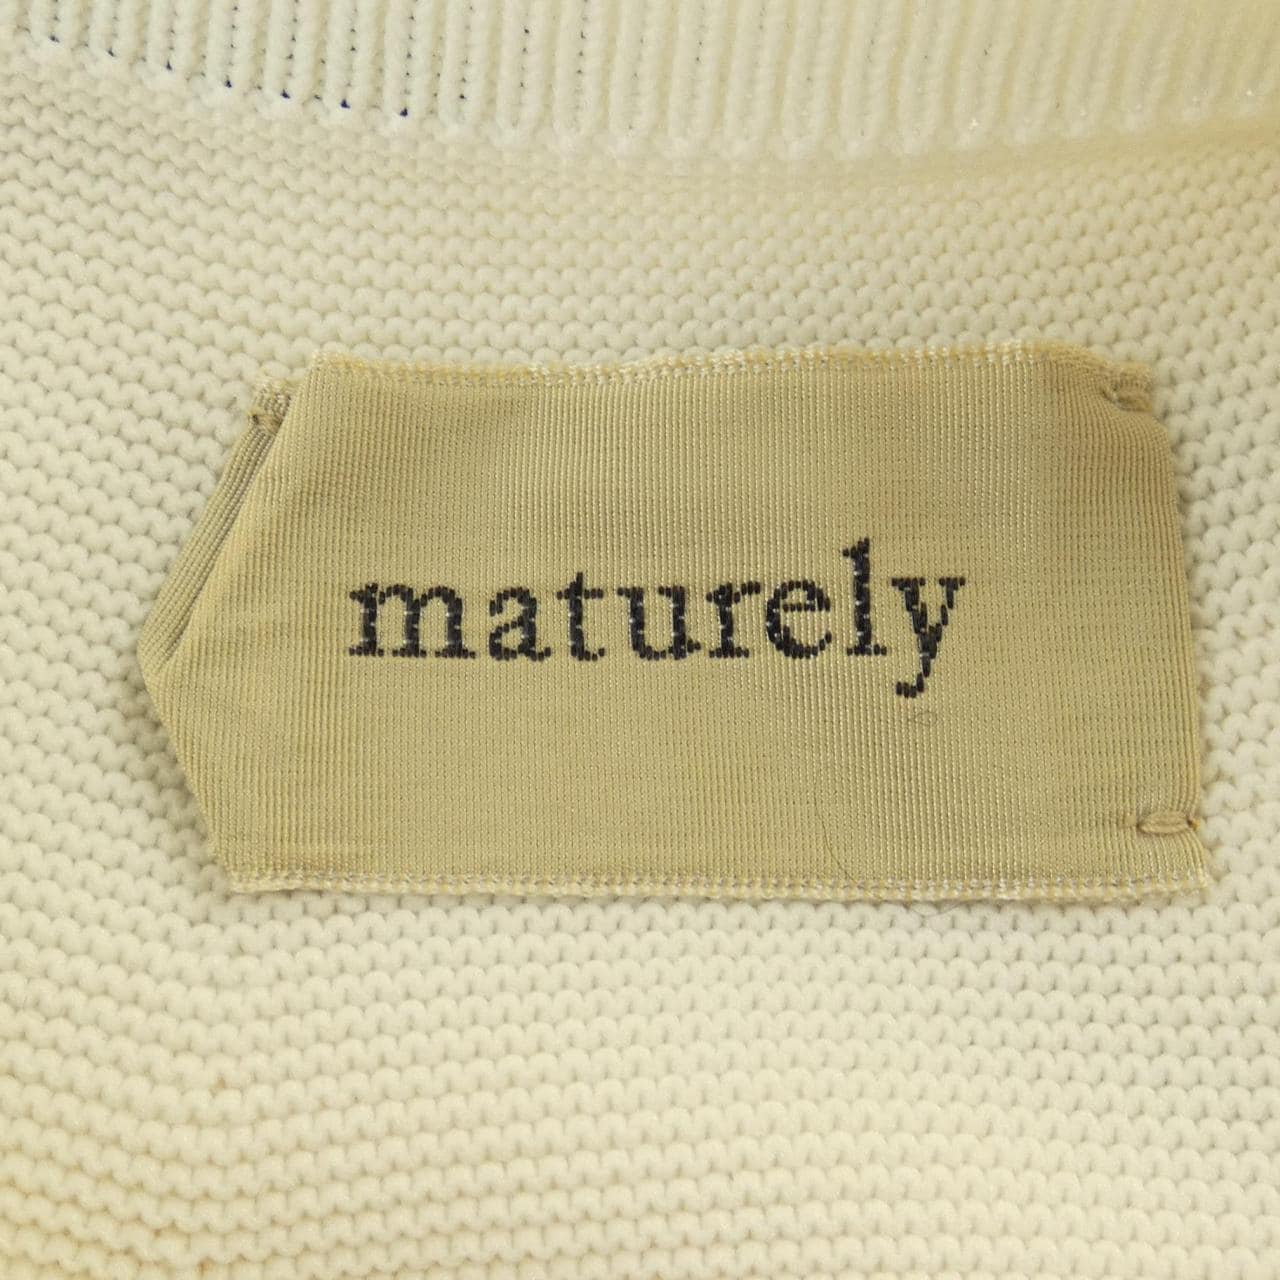 mature maturely knit